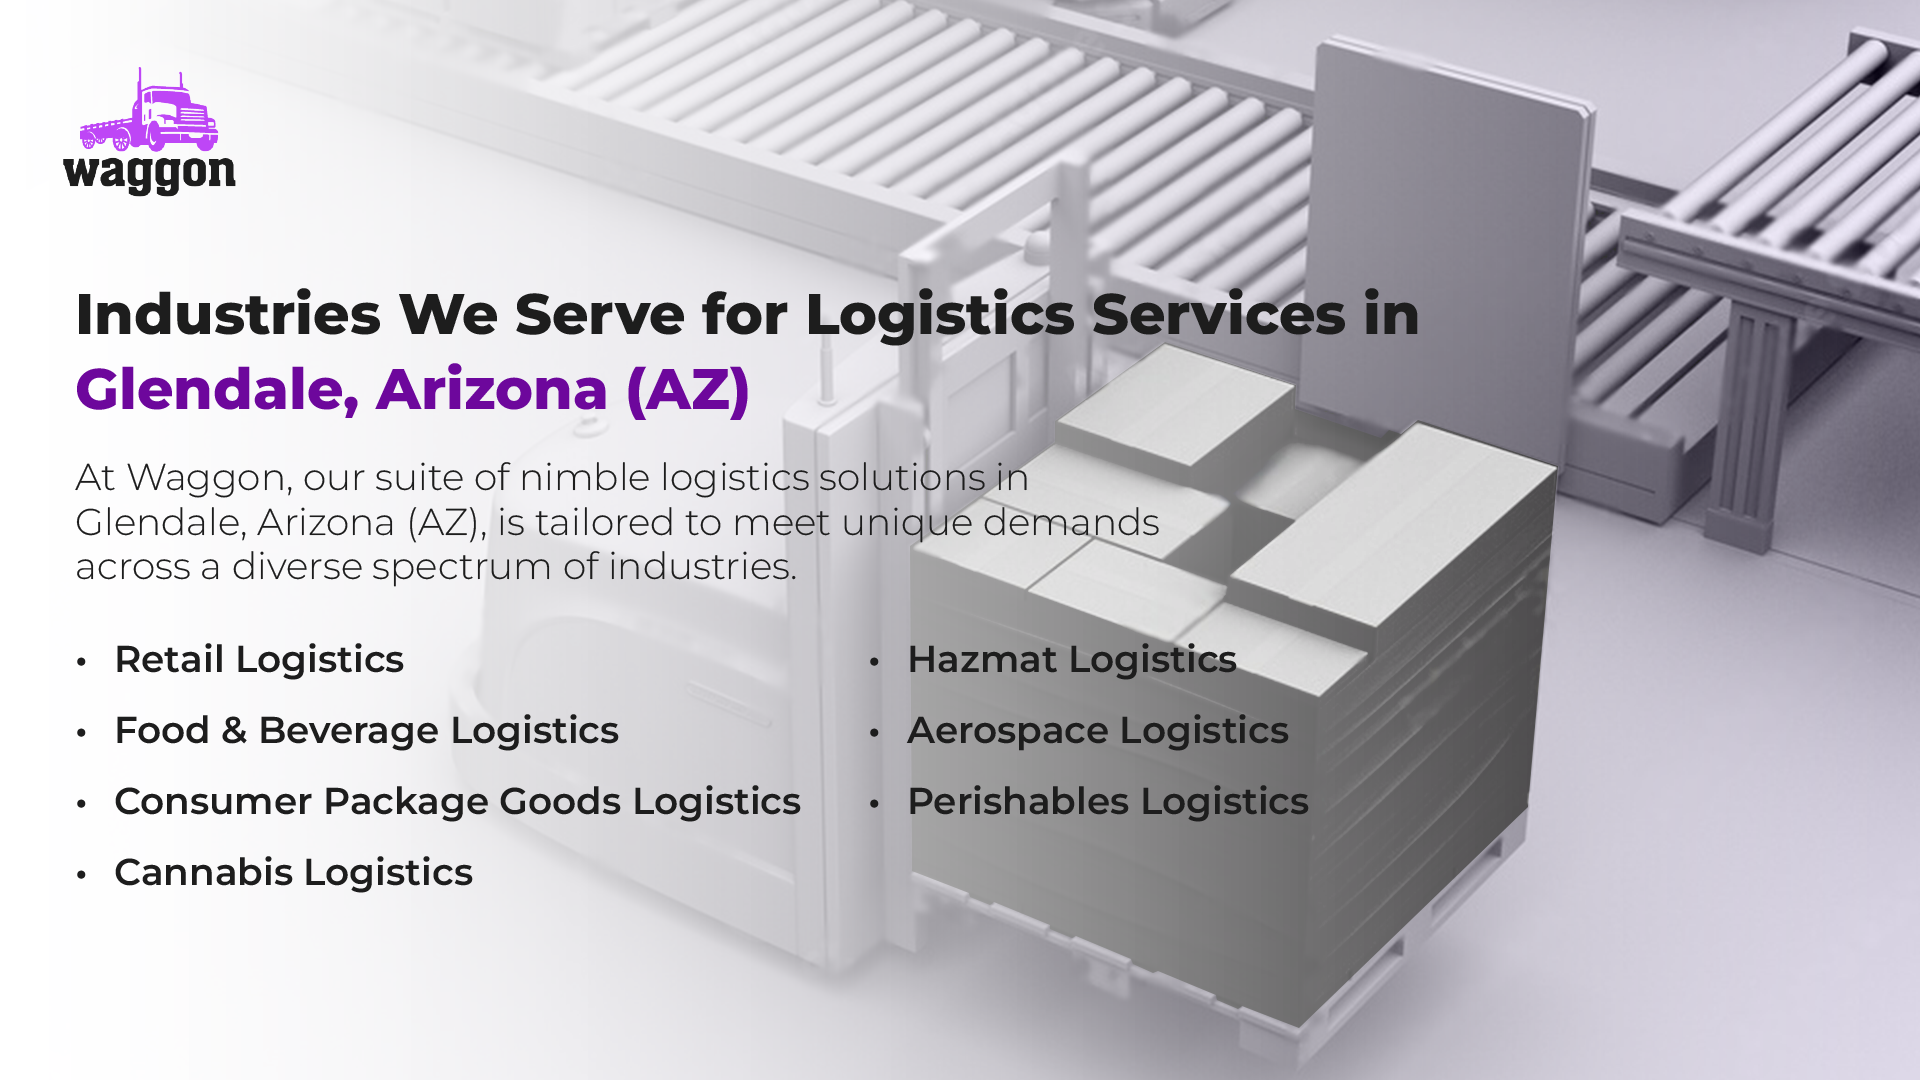 Industries We Serve for Logistics Services in Glendale, Arizona (AZ)